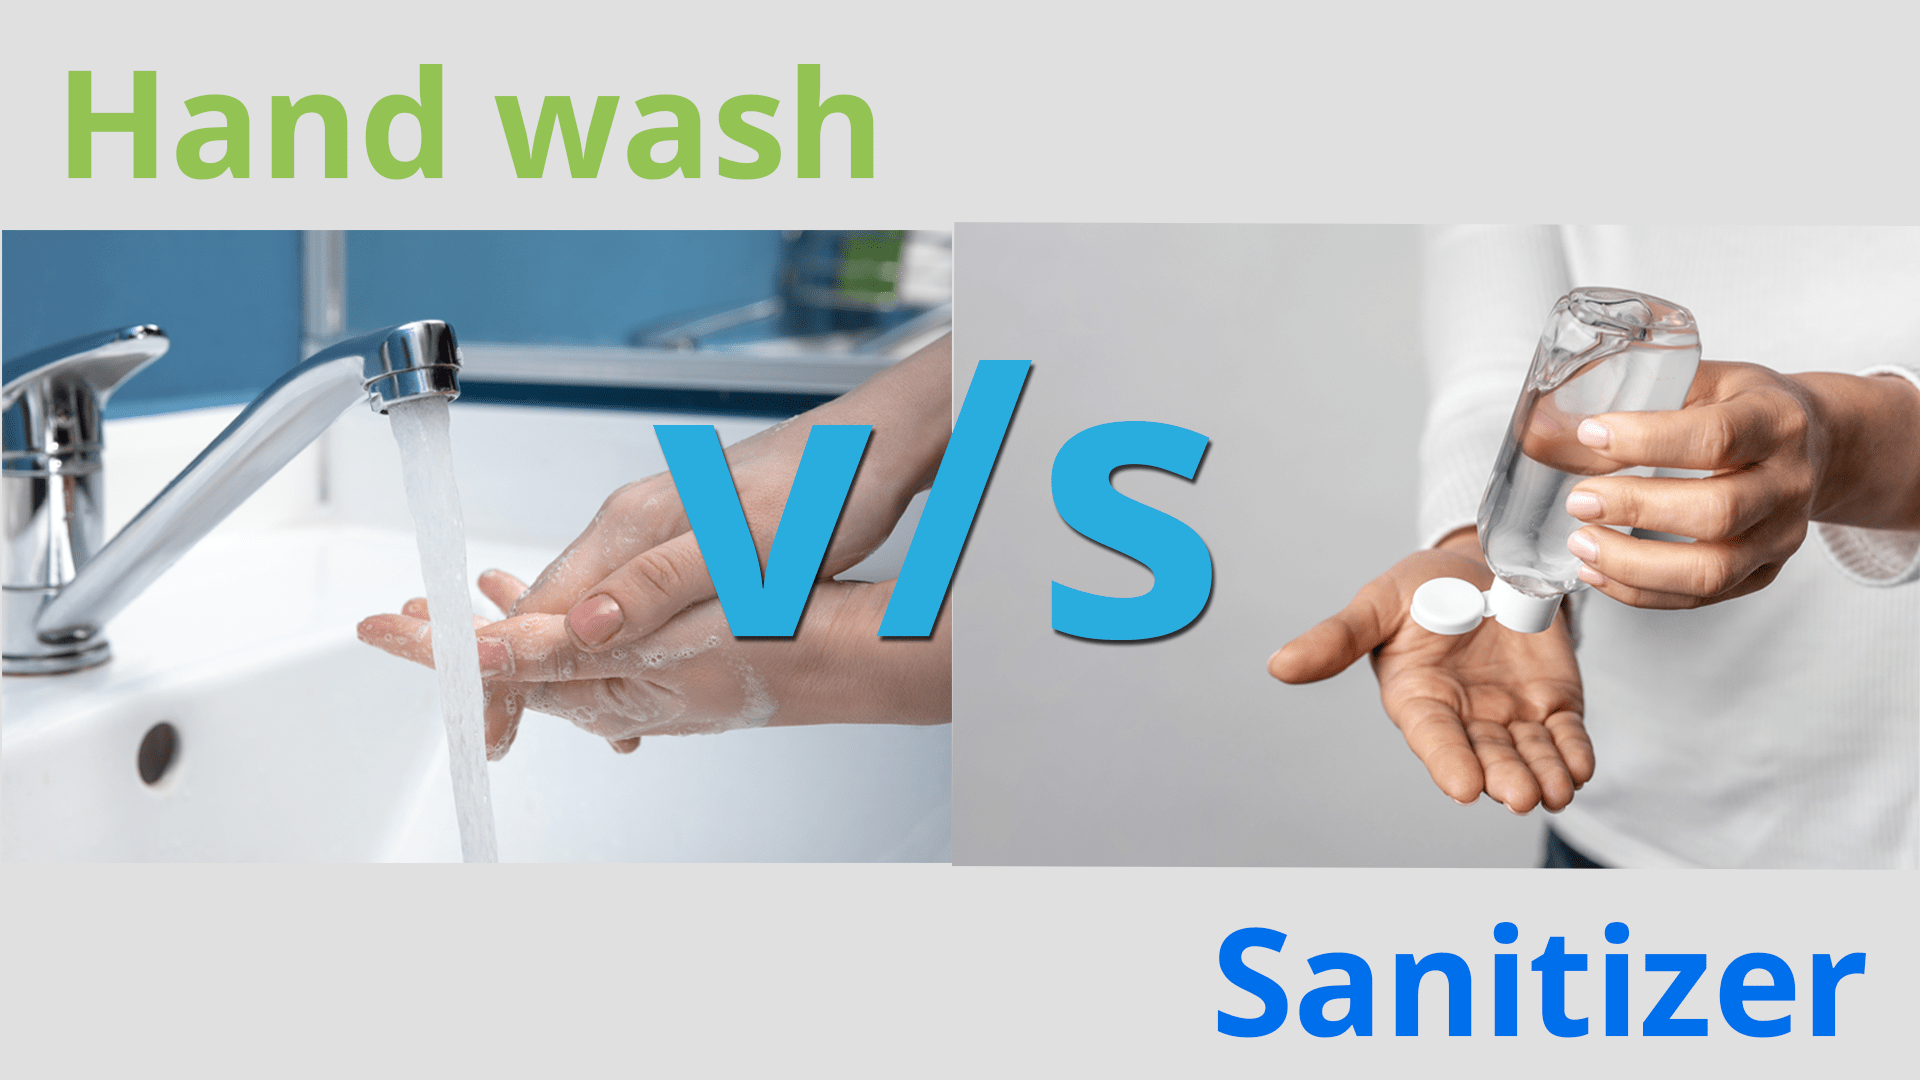 Image representing hand wash versus hand sanitizer